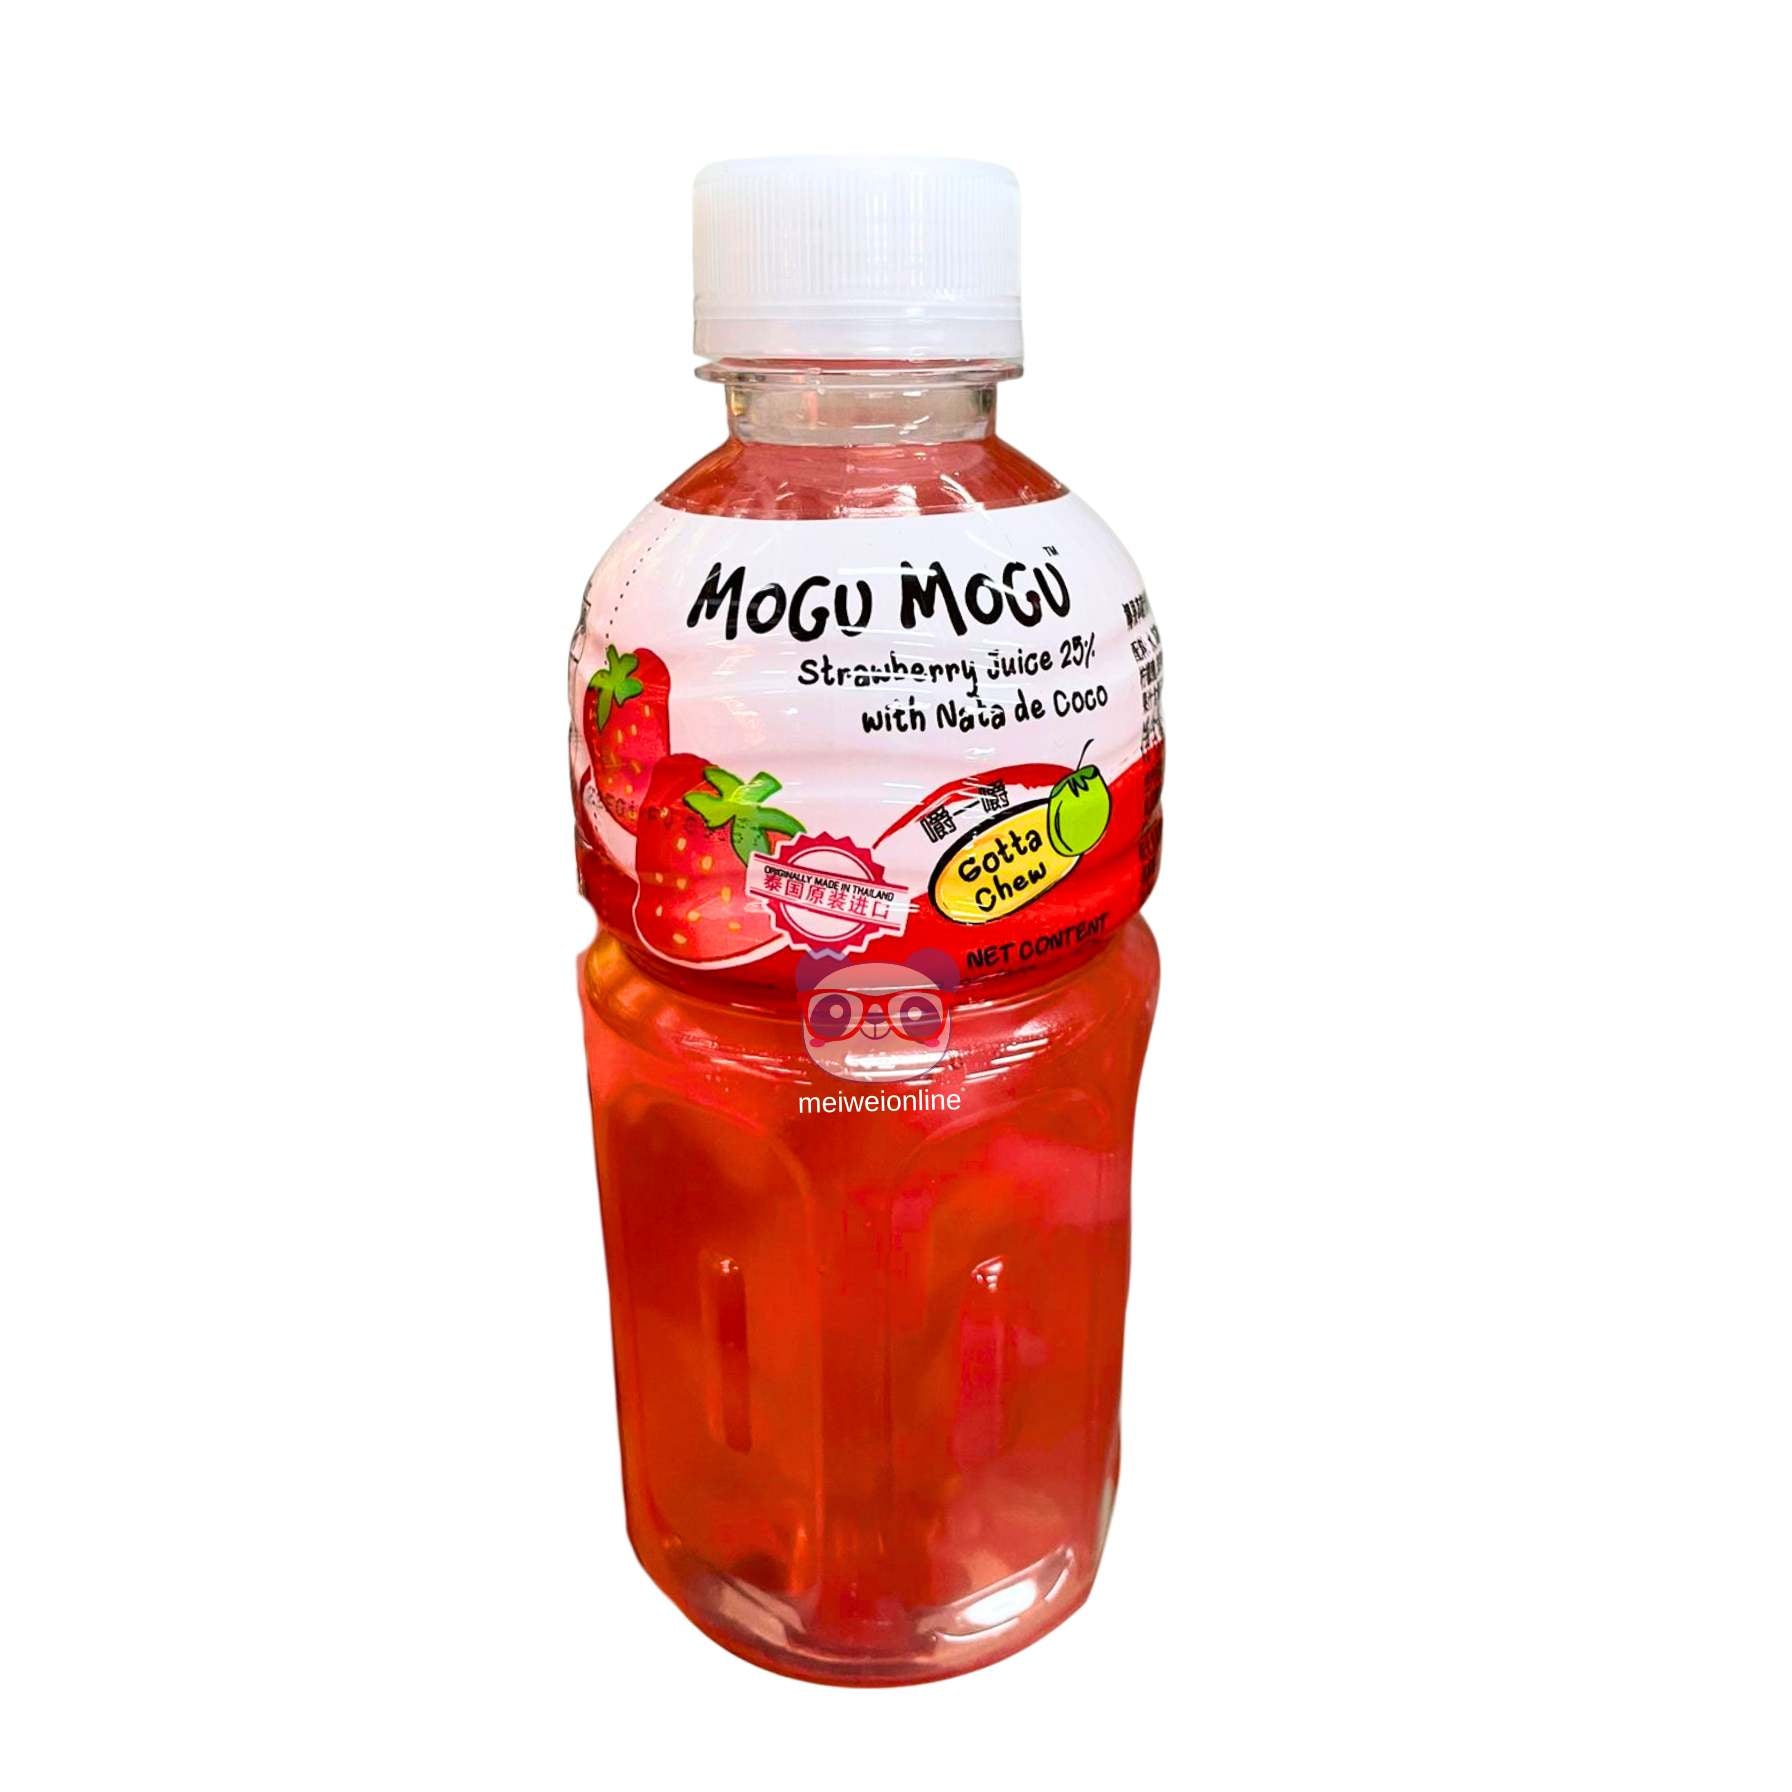 Suco de morango c/ nata de coco - Mogu Mogu 320ml